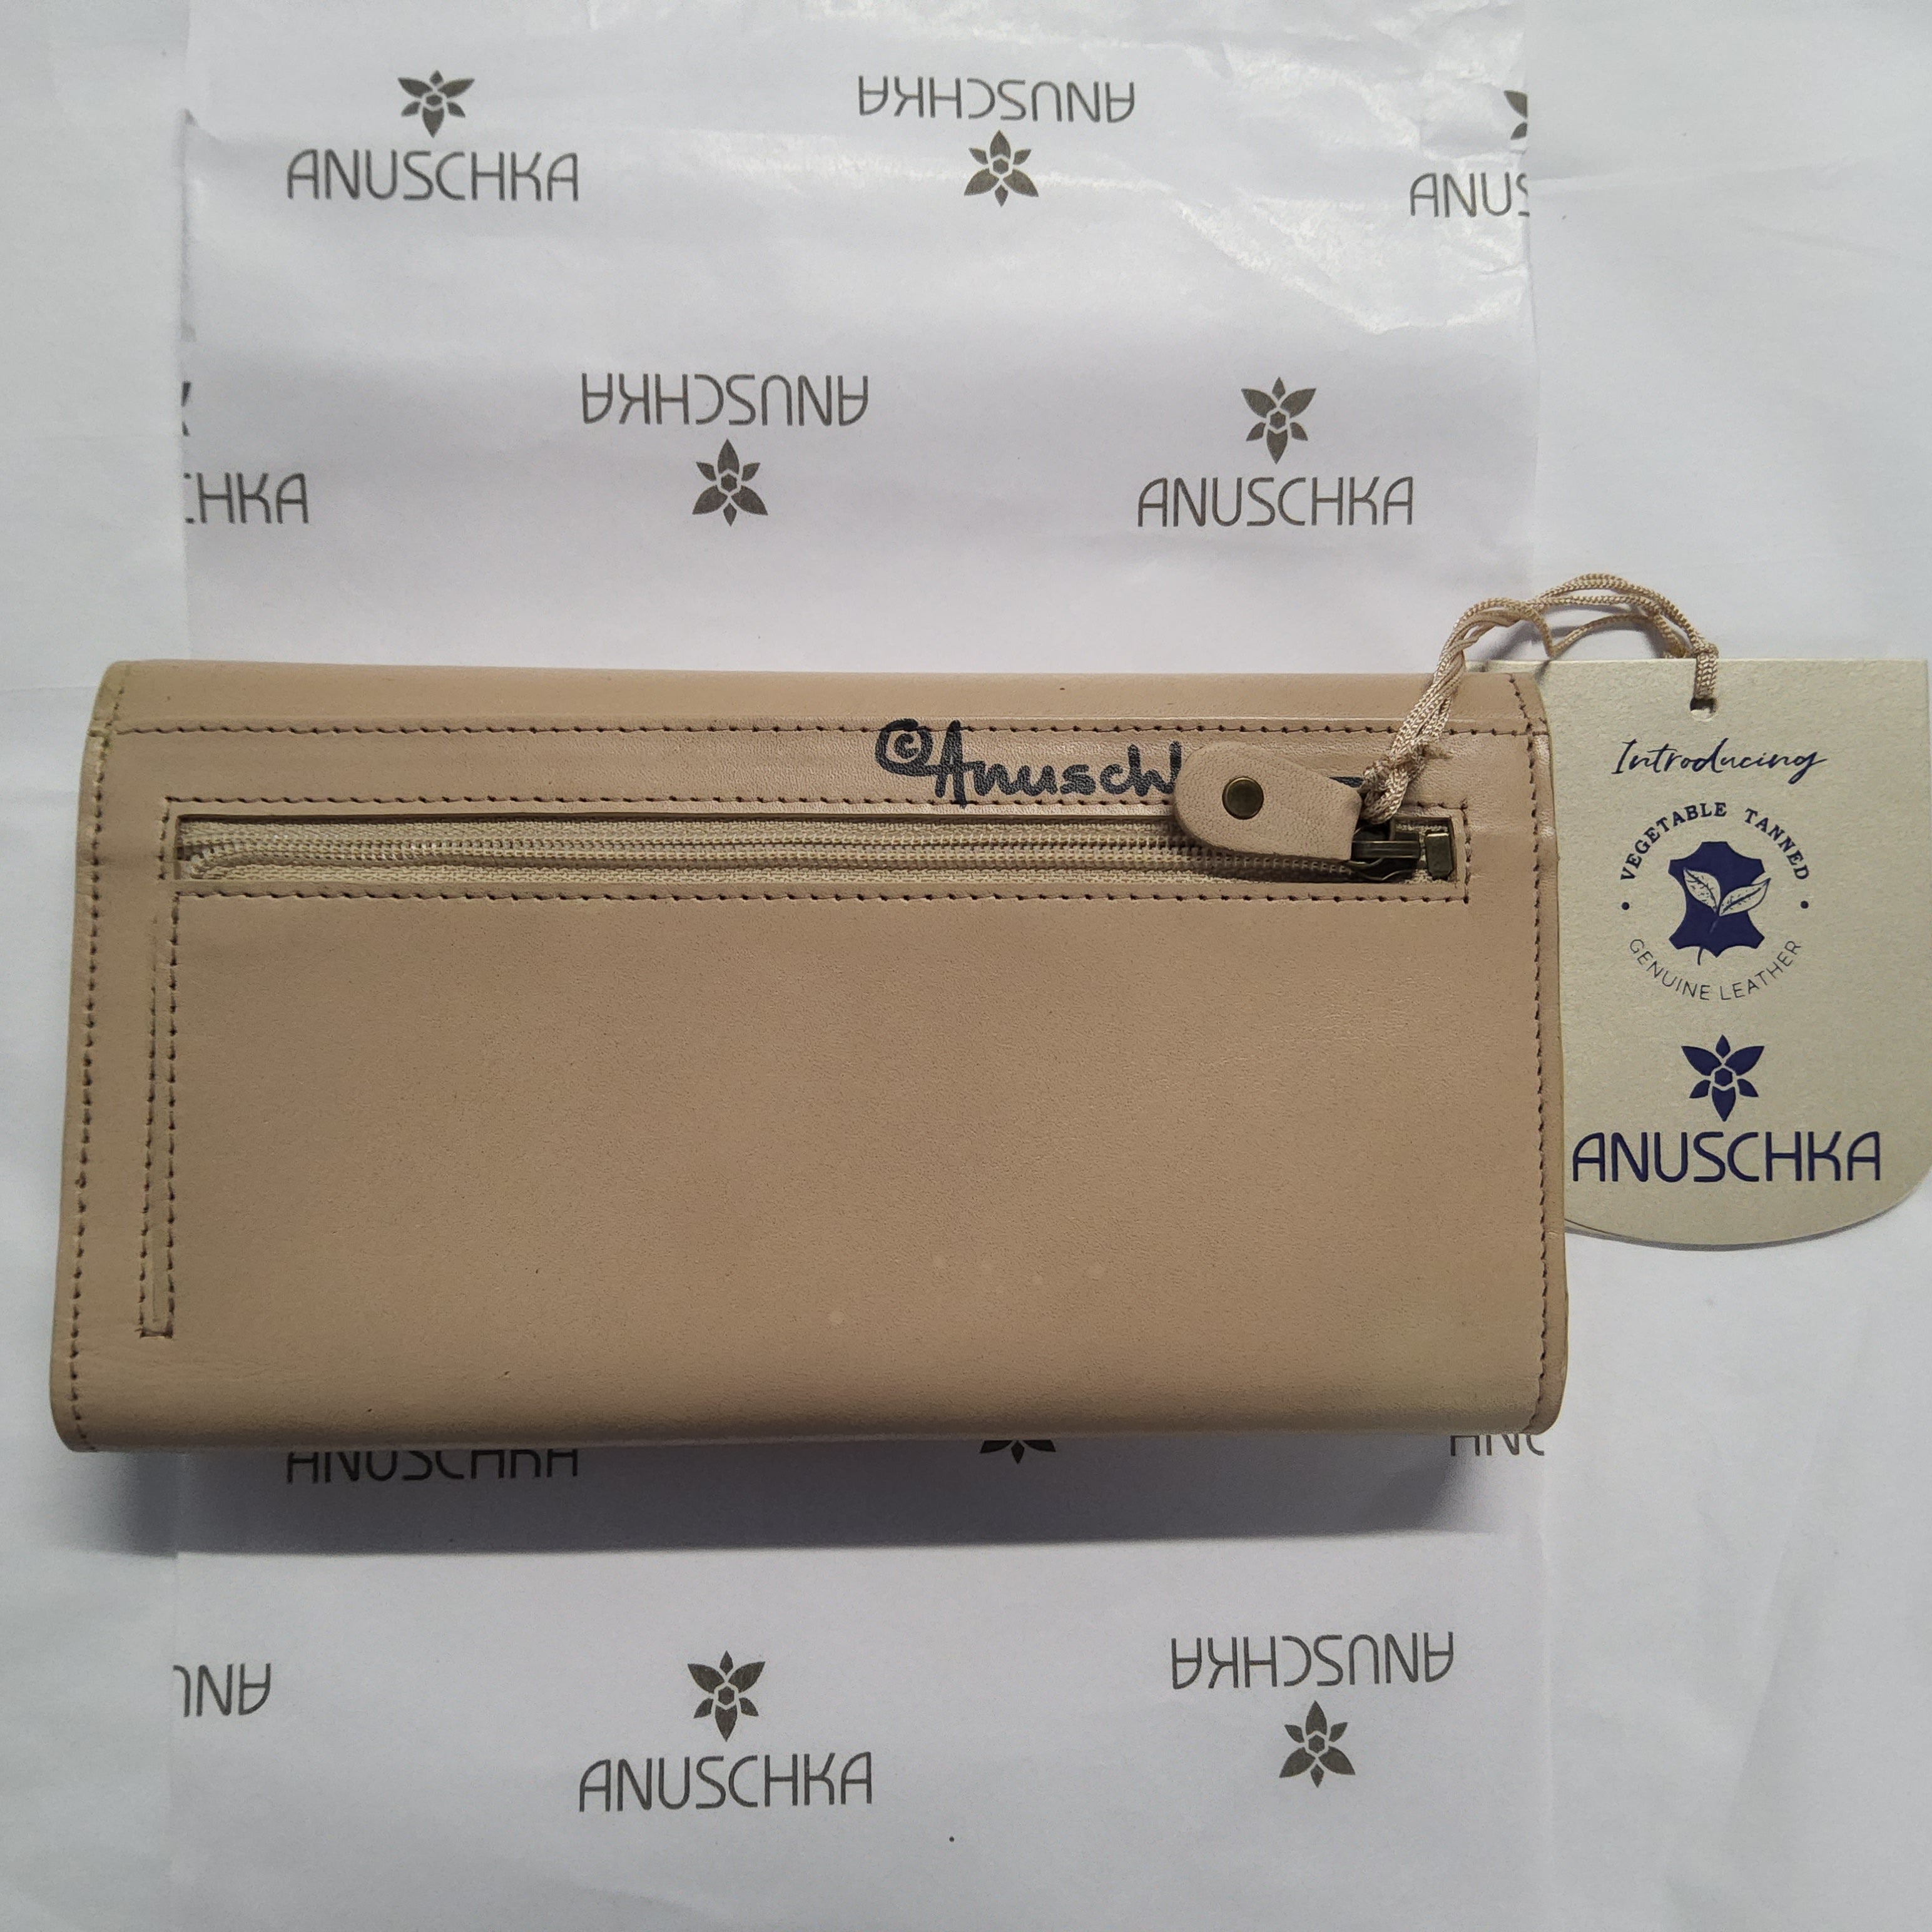 Anuschka Leather Triple Fold Clutch Wallet - "Flower Garden - Almond" Hand painted - RFID 1150-GDN-ALD